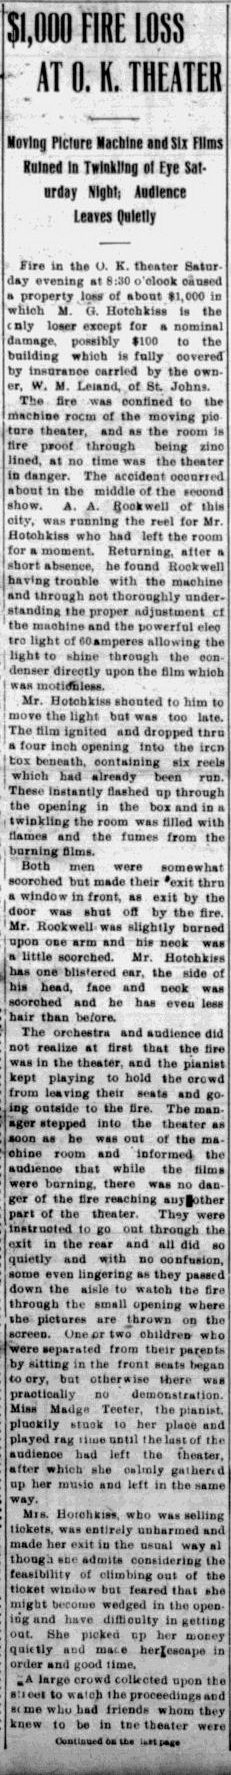 O.K. Theater - Jul 10 1911 Fire Report